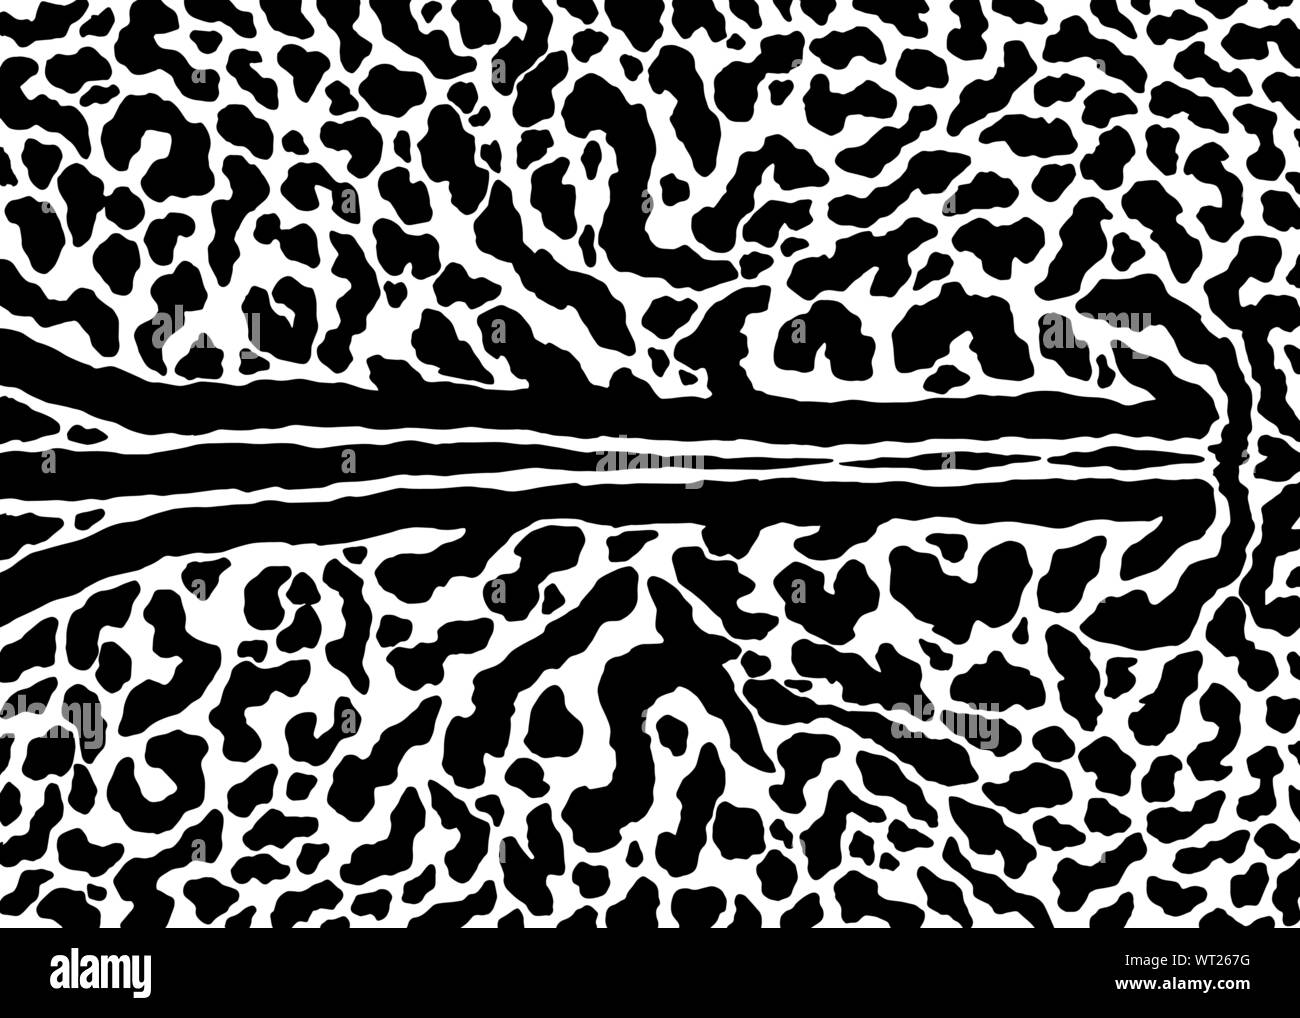 King cheetah skin pattern design. Cheetah spots print vector illustration background. Wildlife fur skin design illustration for print, web, home decor Stock Vector